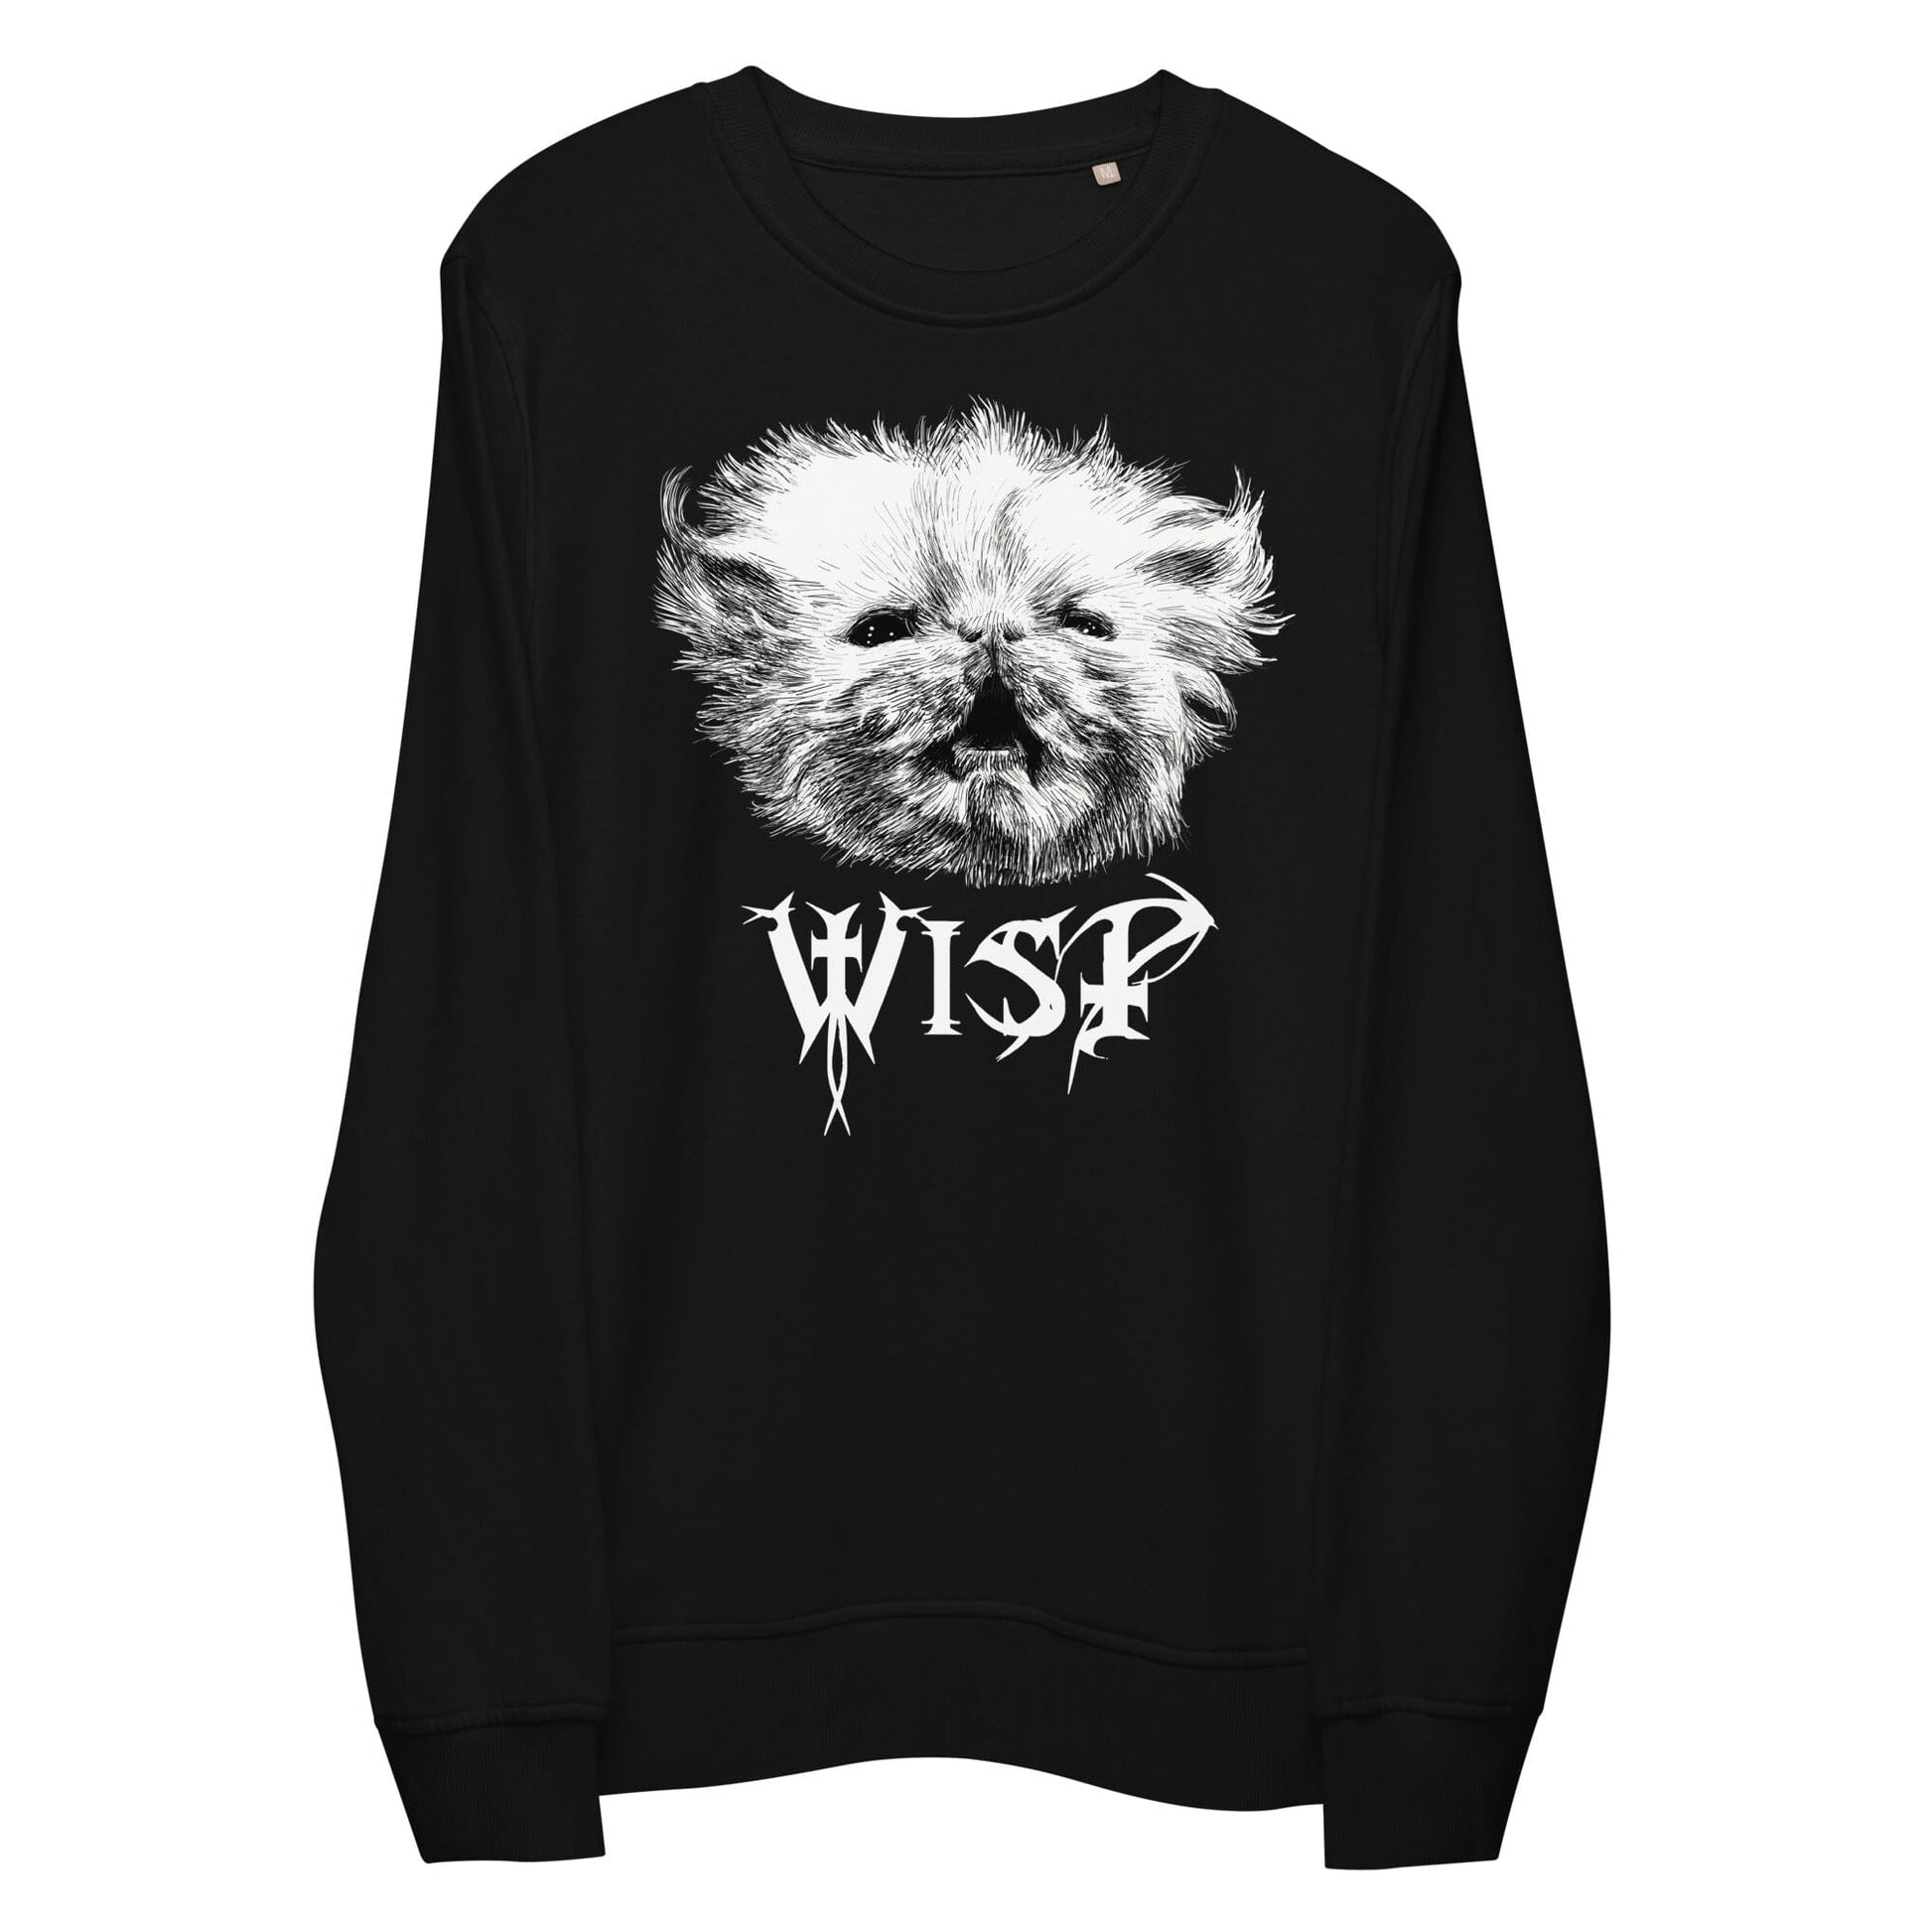 BLACK Metal Wisp Sweatshirt [Unfoiled] (All net proceeds go to Rags to Riches Animal Rescue) JoyousJoyfulJoyness S 